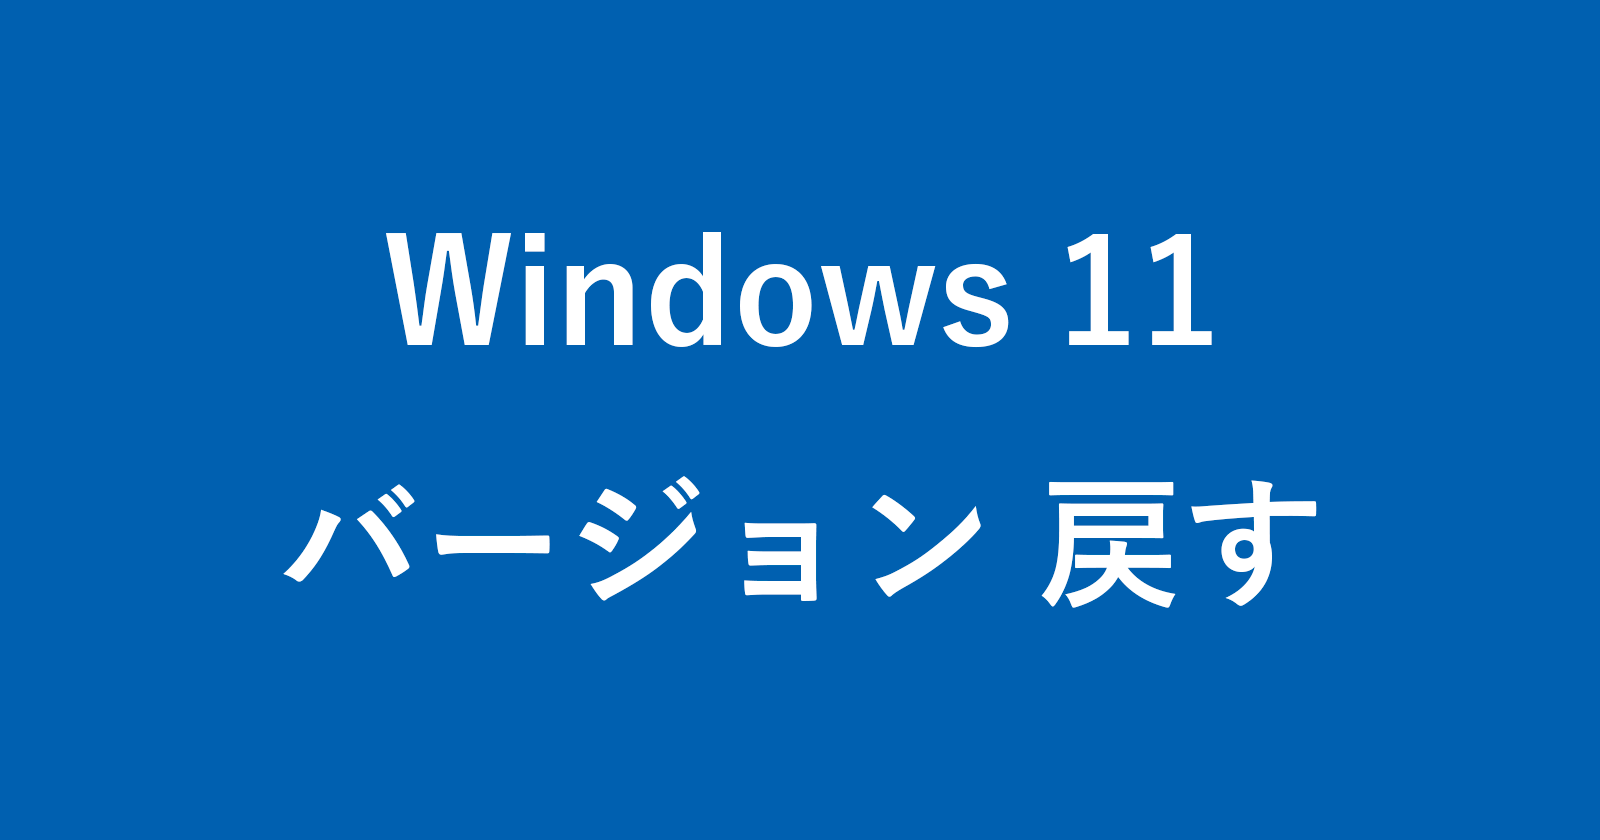 windows 11 previous version